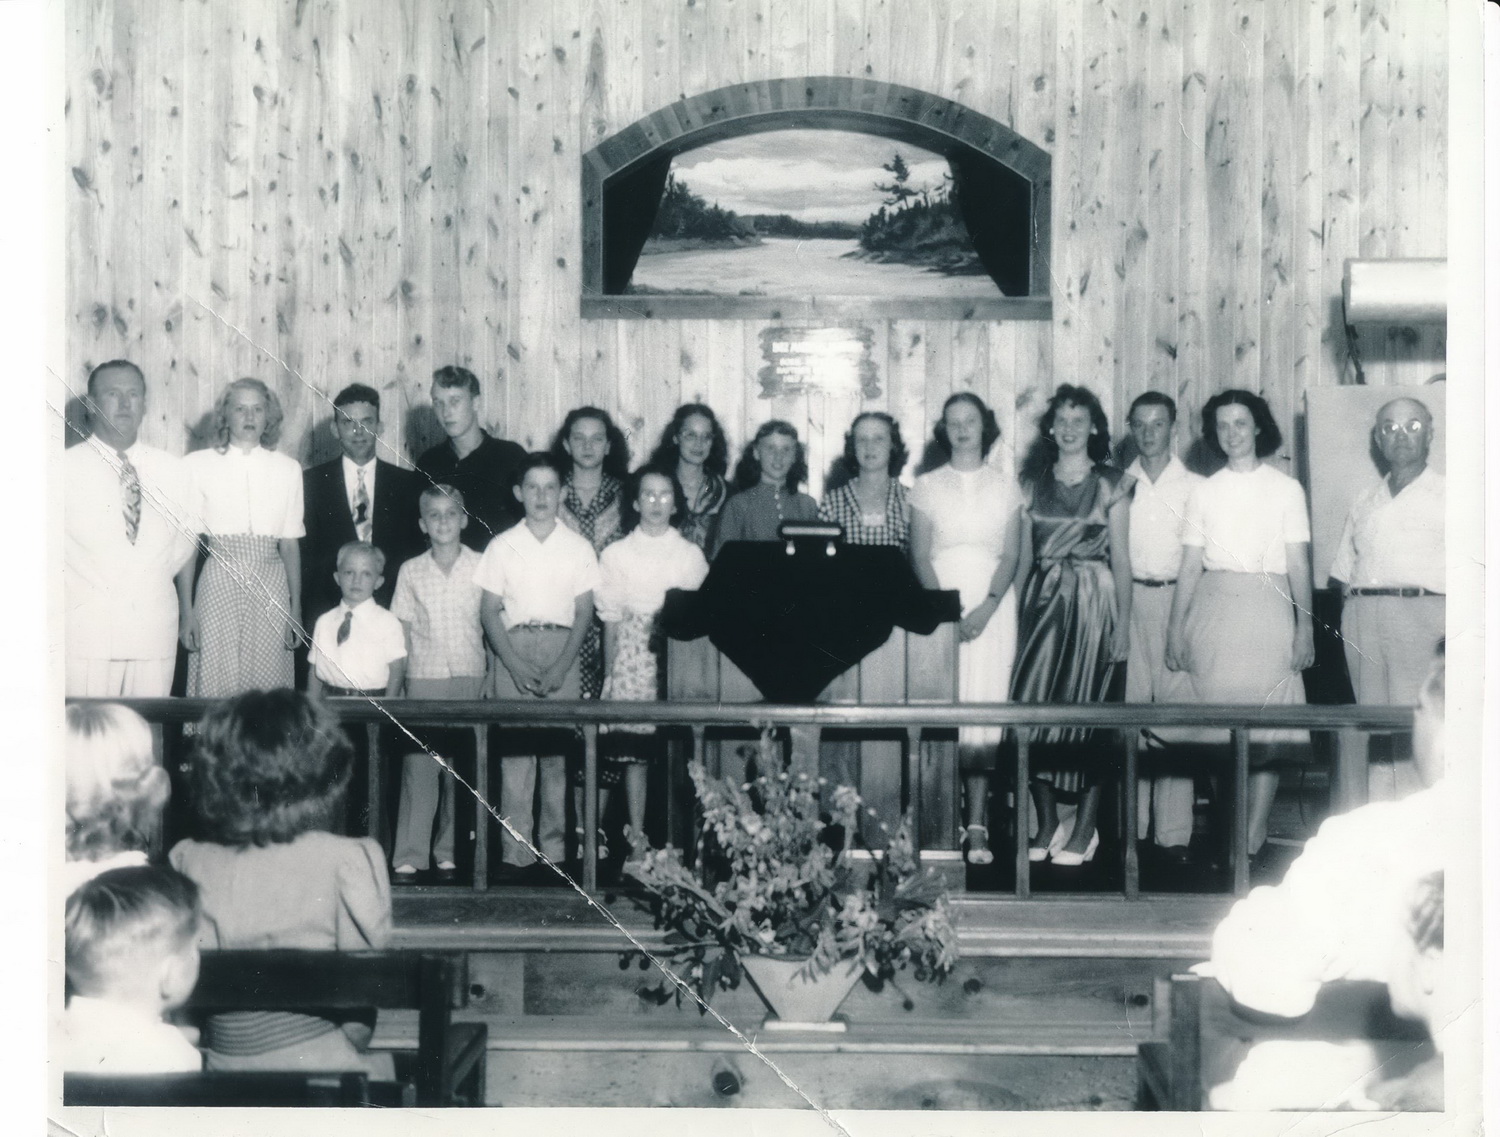 Baptisim at Flemington Baptist Church, 1949